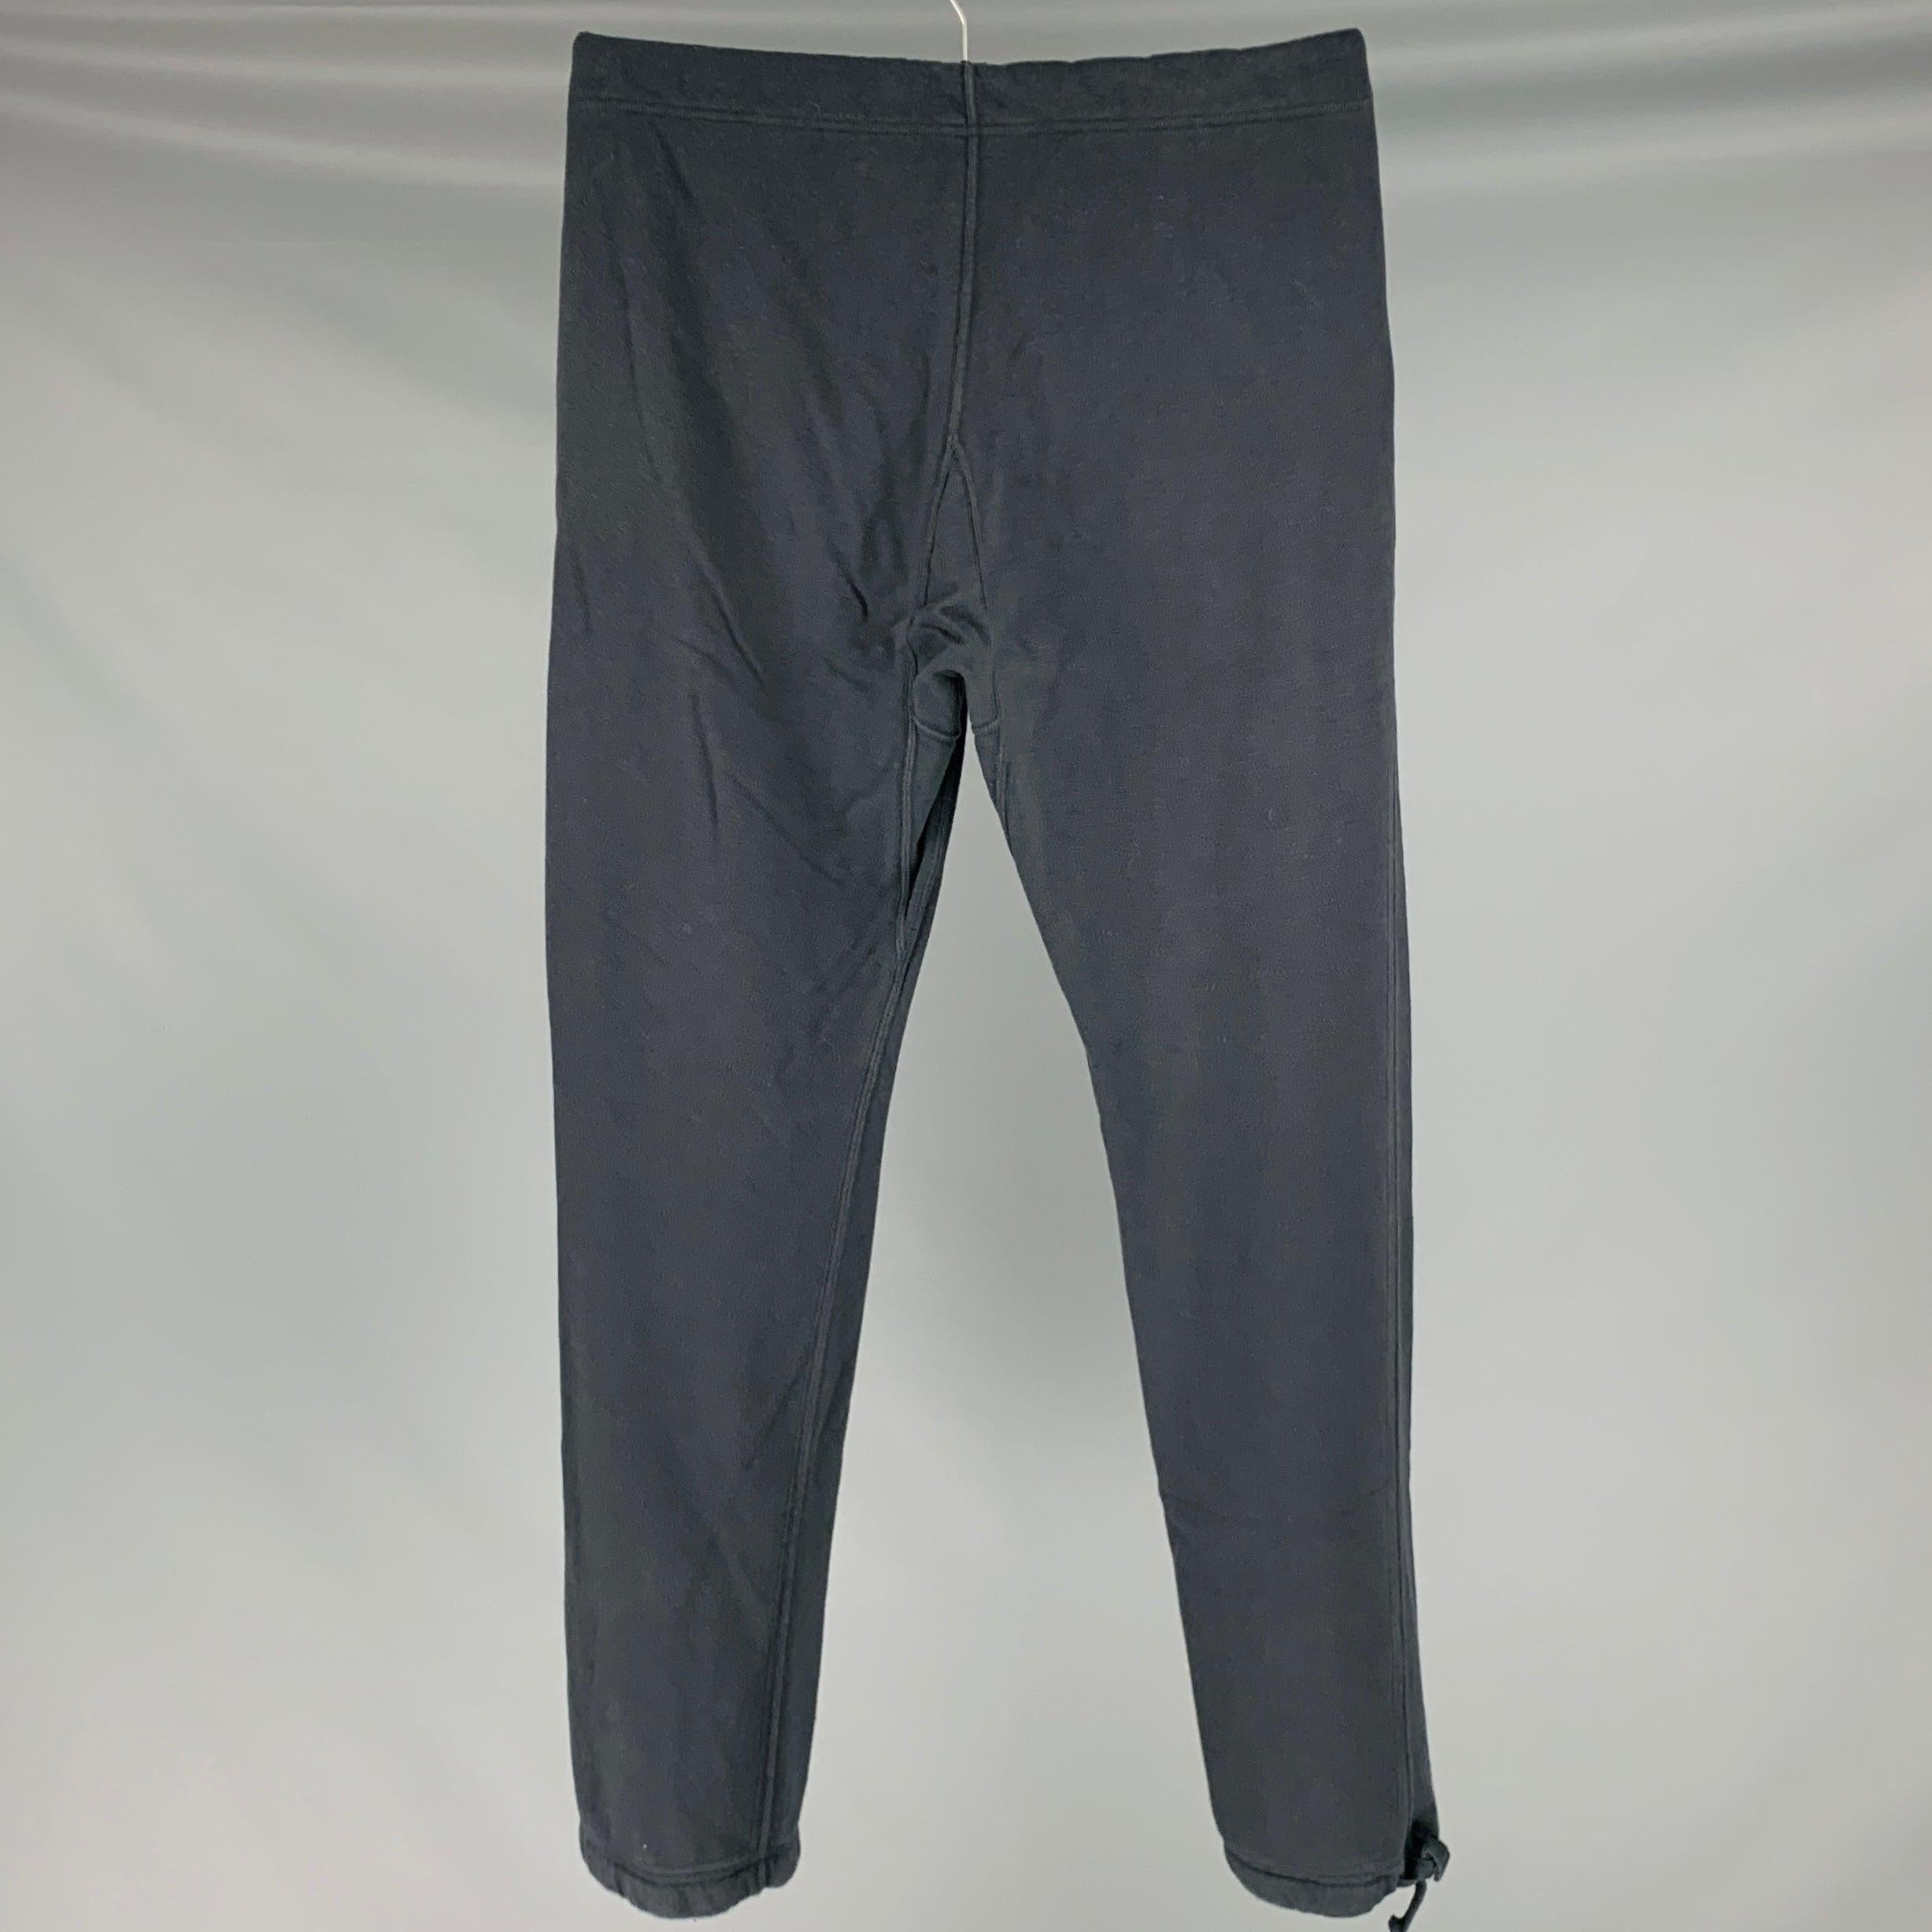 VISVIM -Sweat Pants DMGD- Size S Black Wash Cotton Drawstring Casual Pants For Sale 2